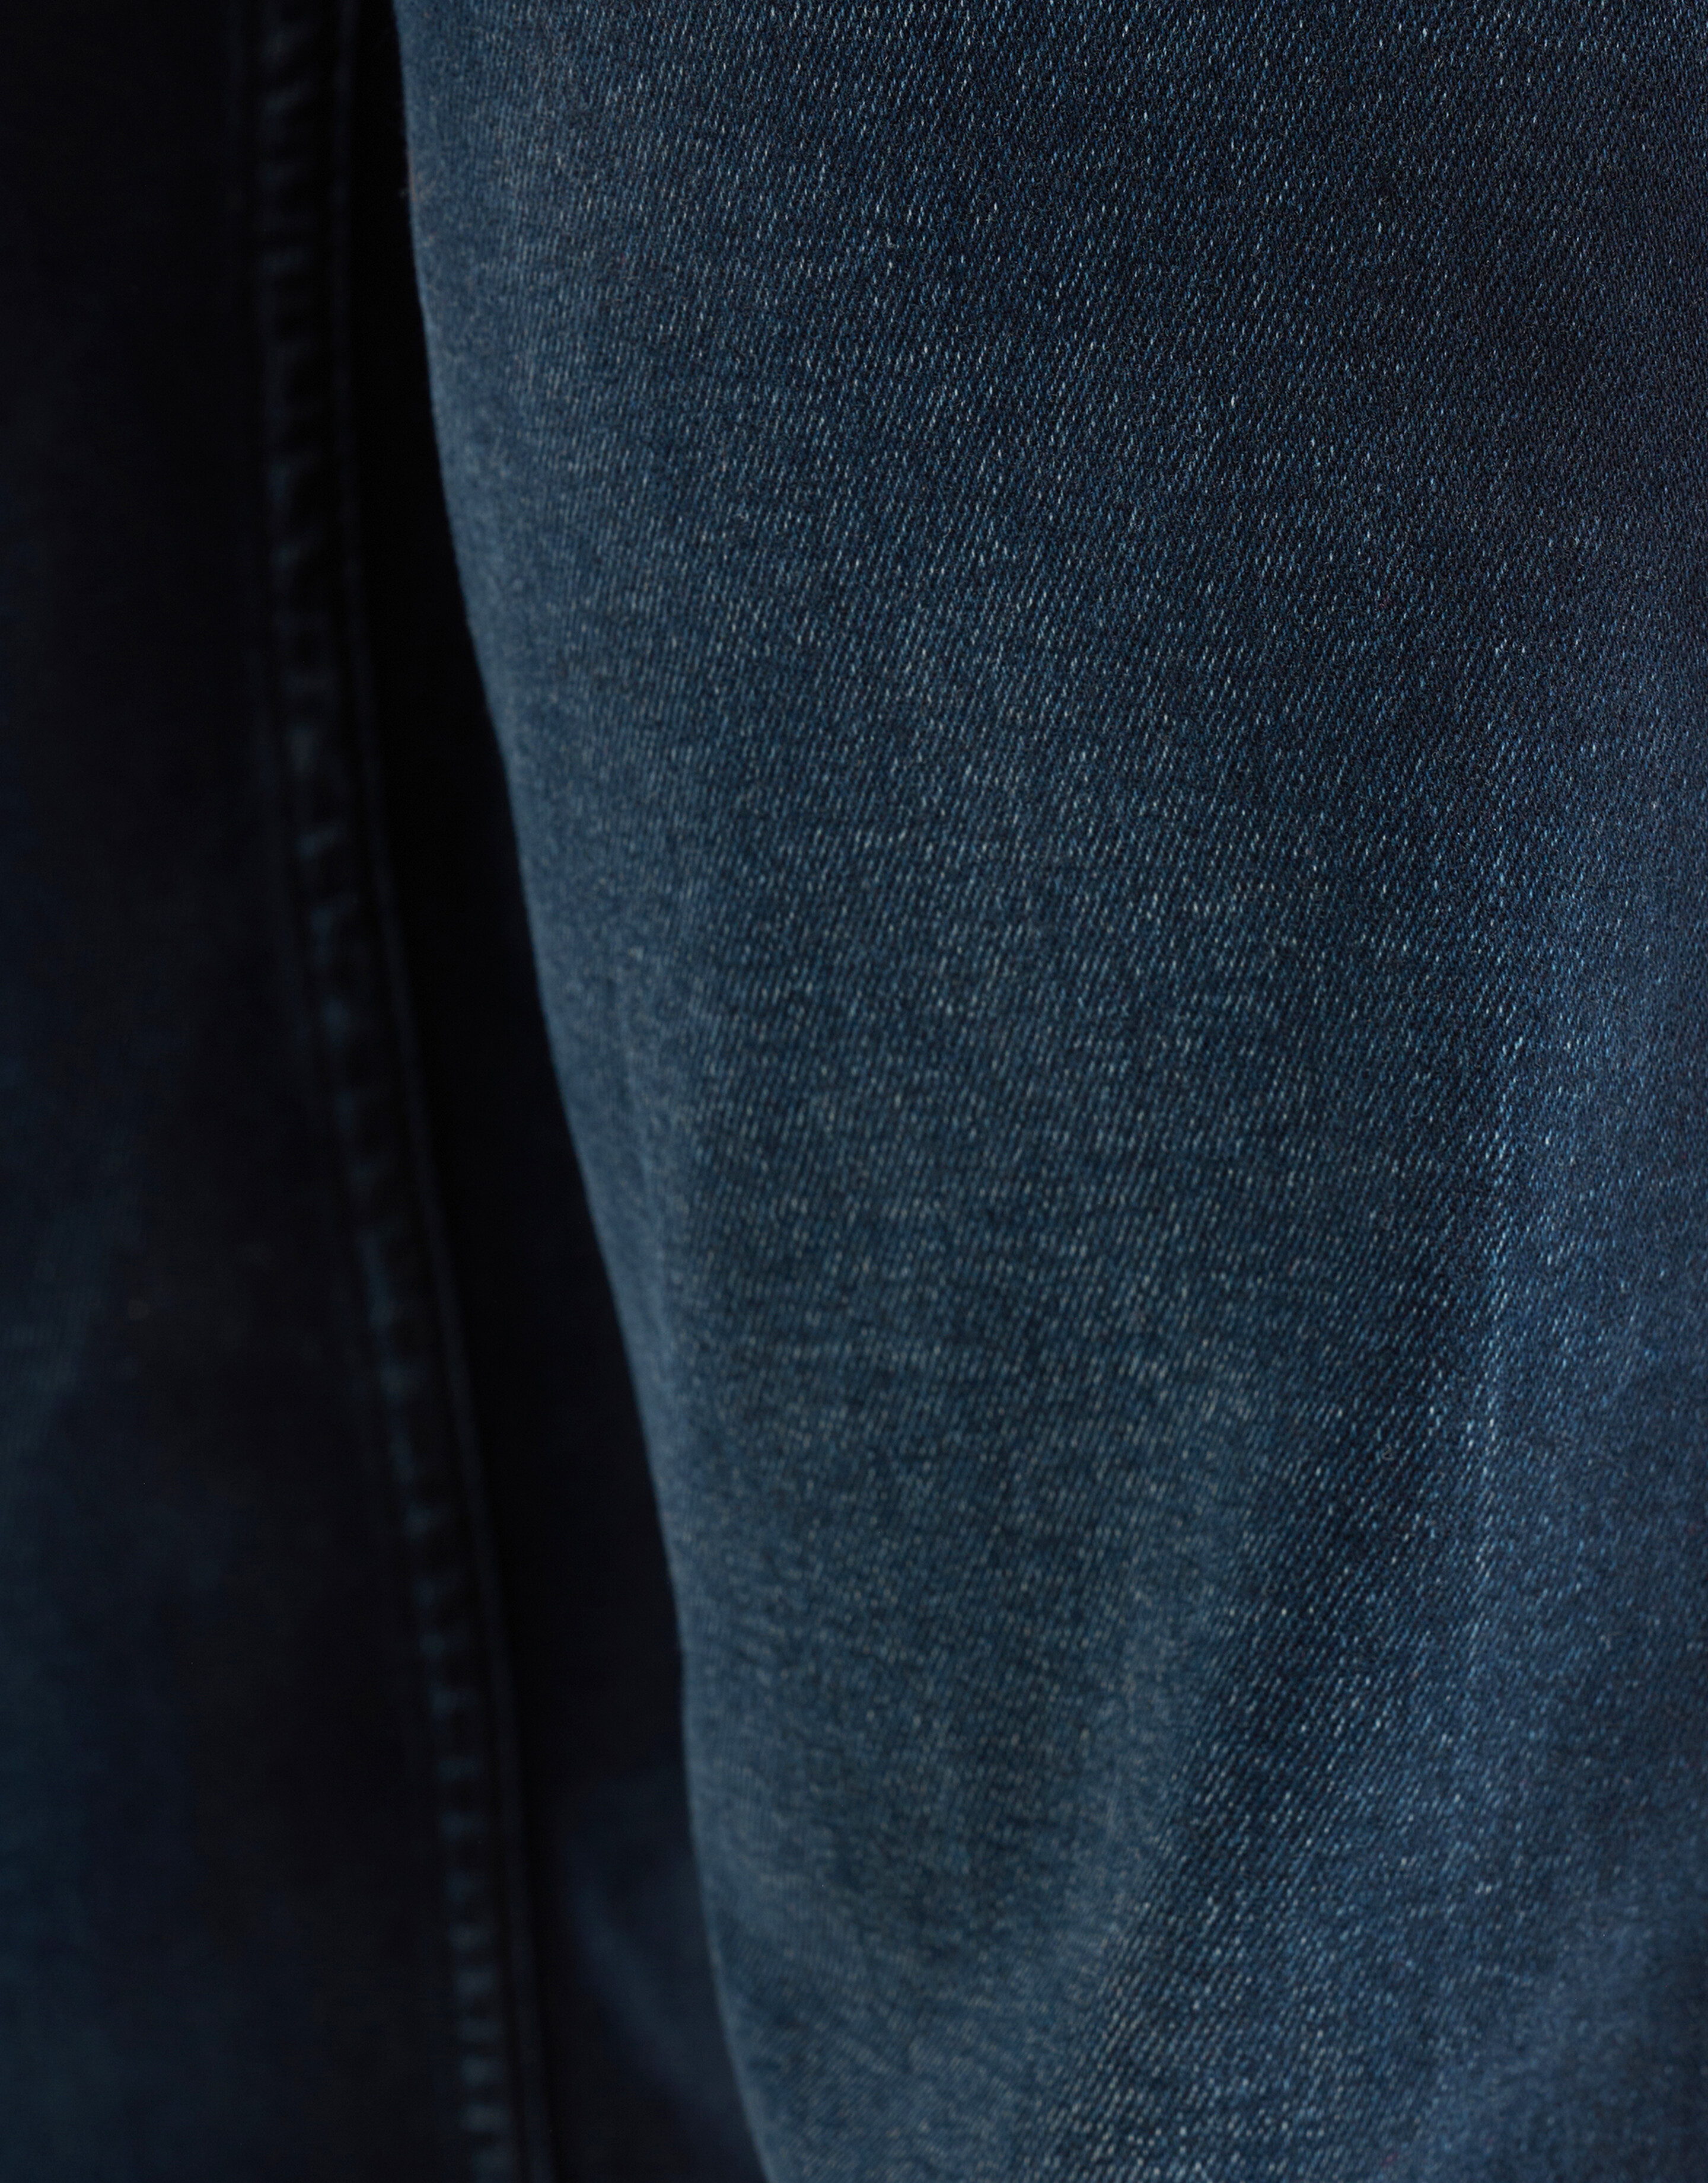 Straight Jeans Blue/Black L32 Refill